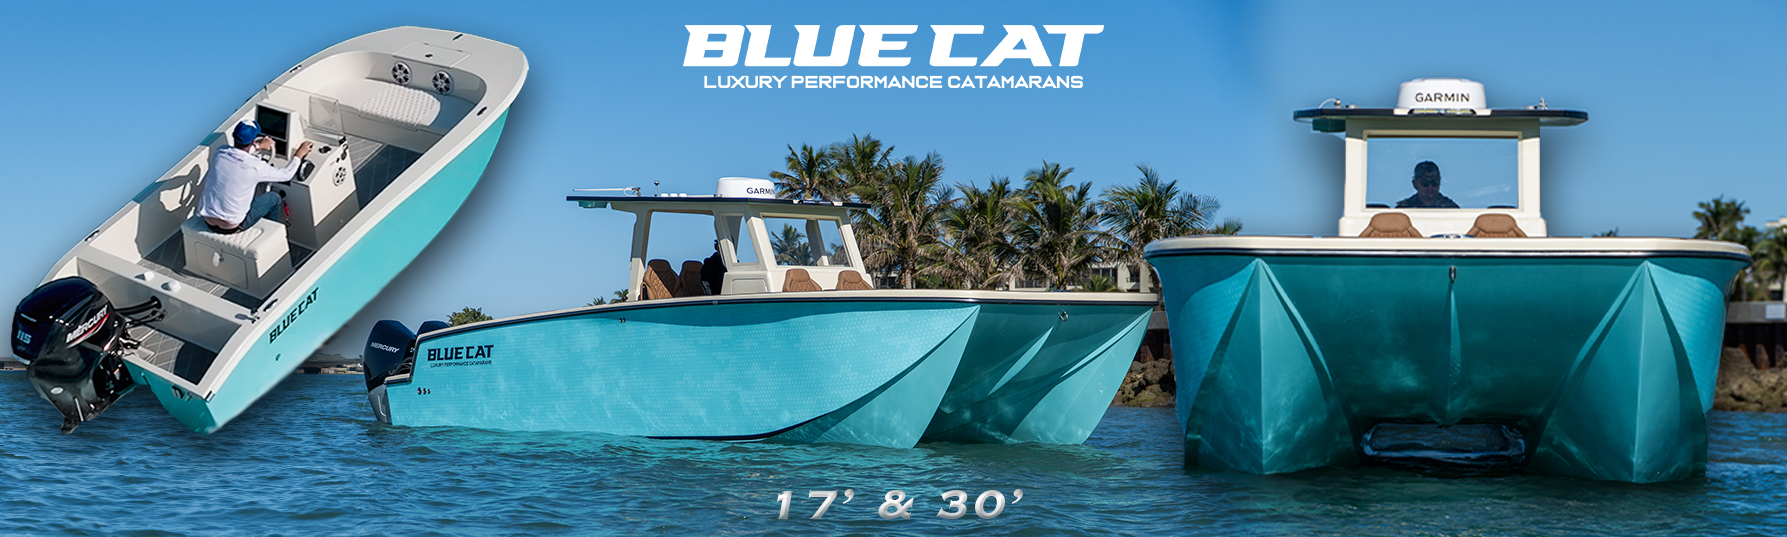 Bluecat 30 Updated